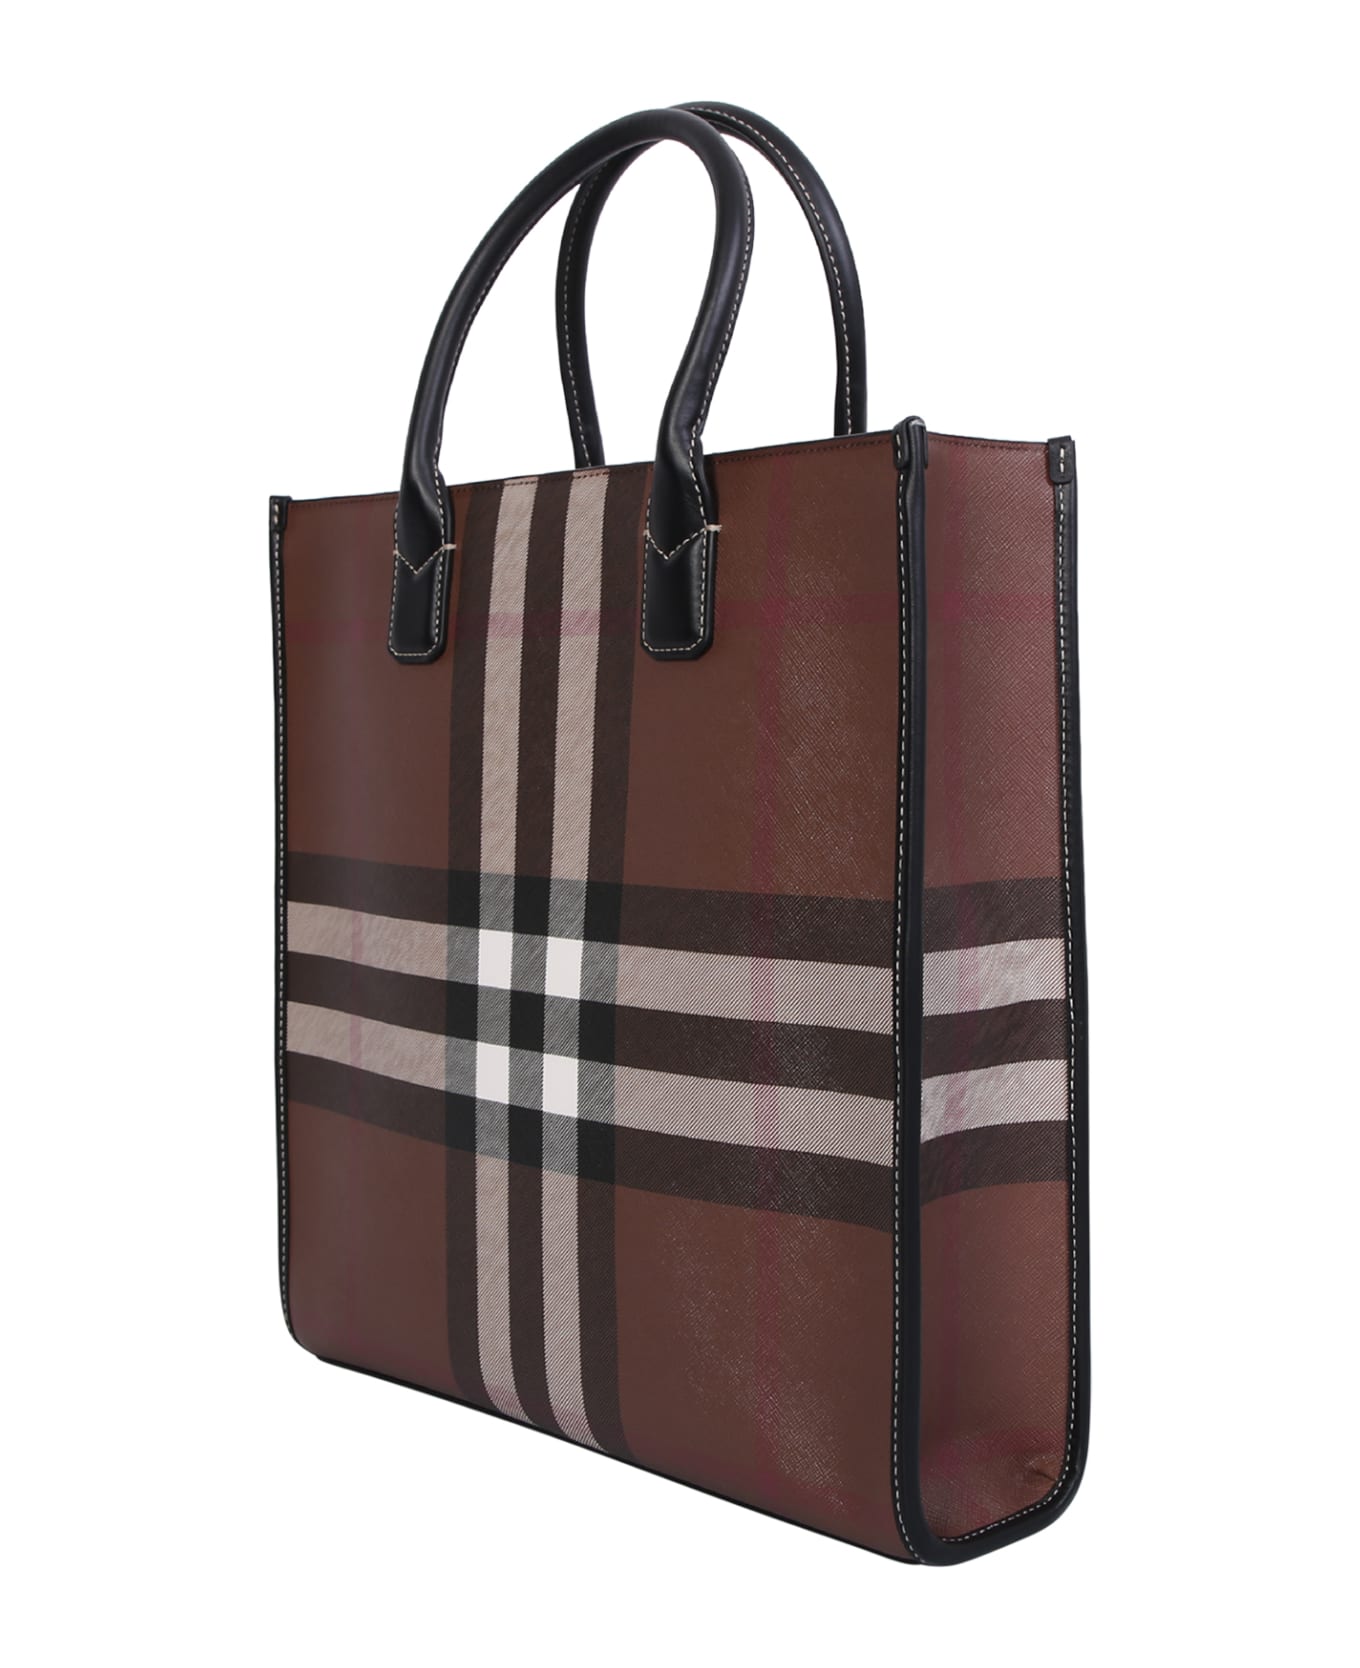 Burberry Tote Bag Denny - Brown